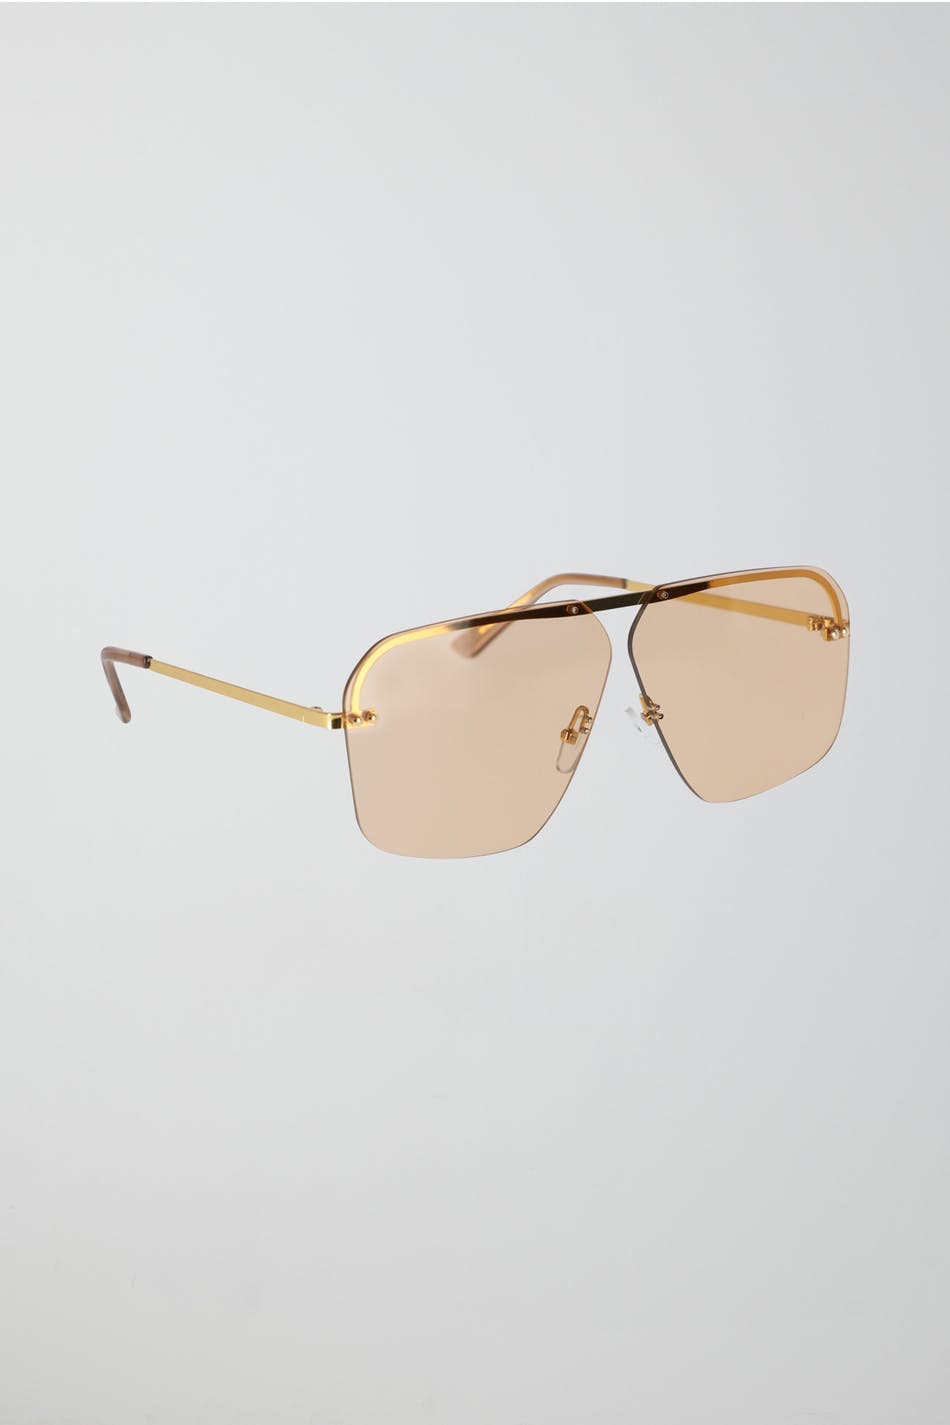 Gina Tricot - Aviator sunglasses - solglasögon - Brown - ONESIZE - Female